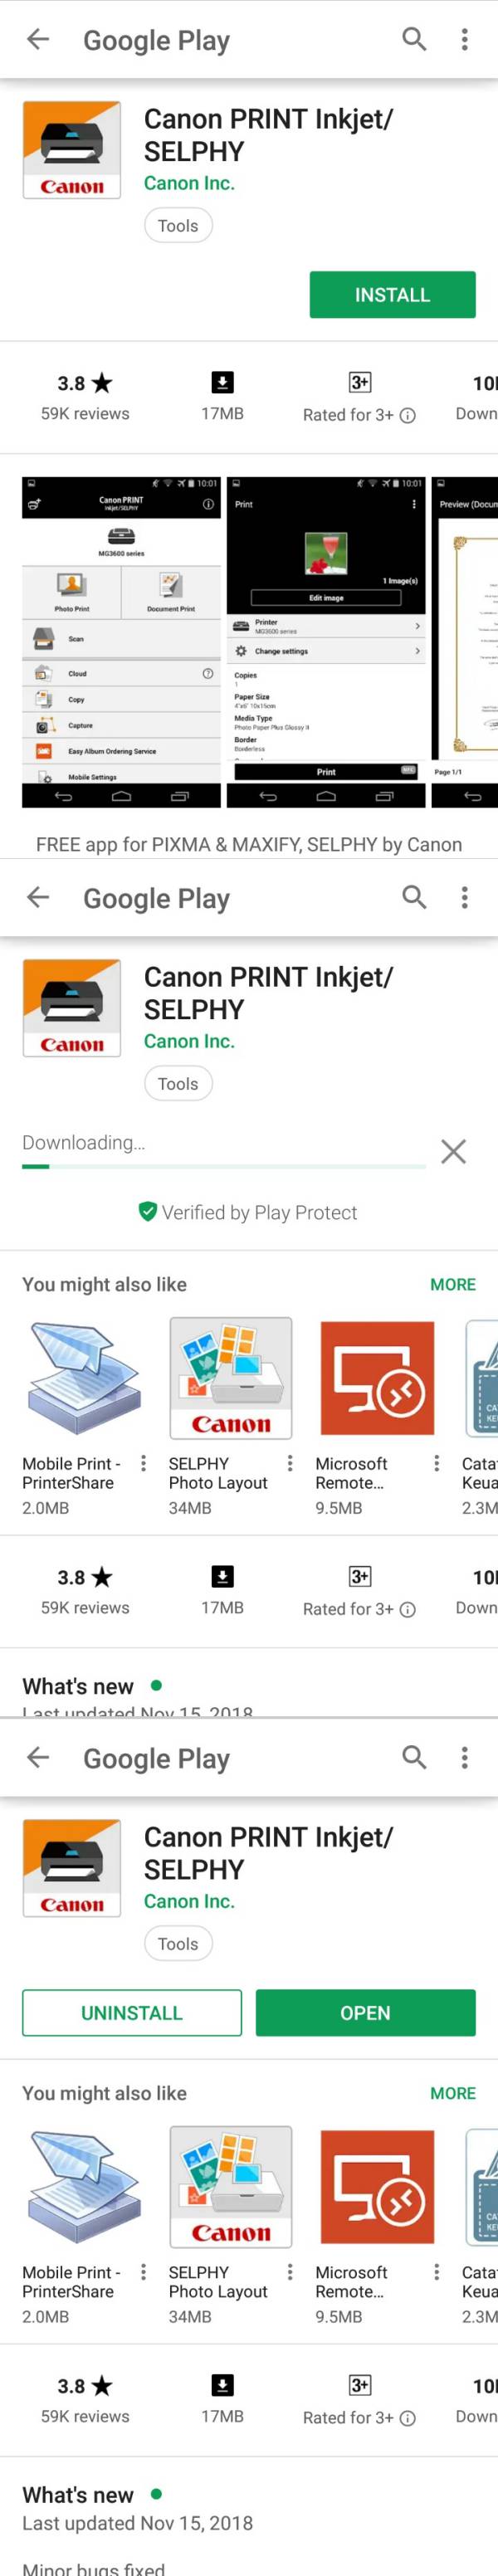 Cara Install Aplikasi Canon PRINT Inkjet/SELPHY dari Google Play